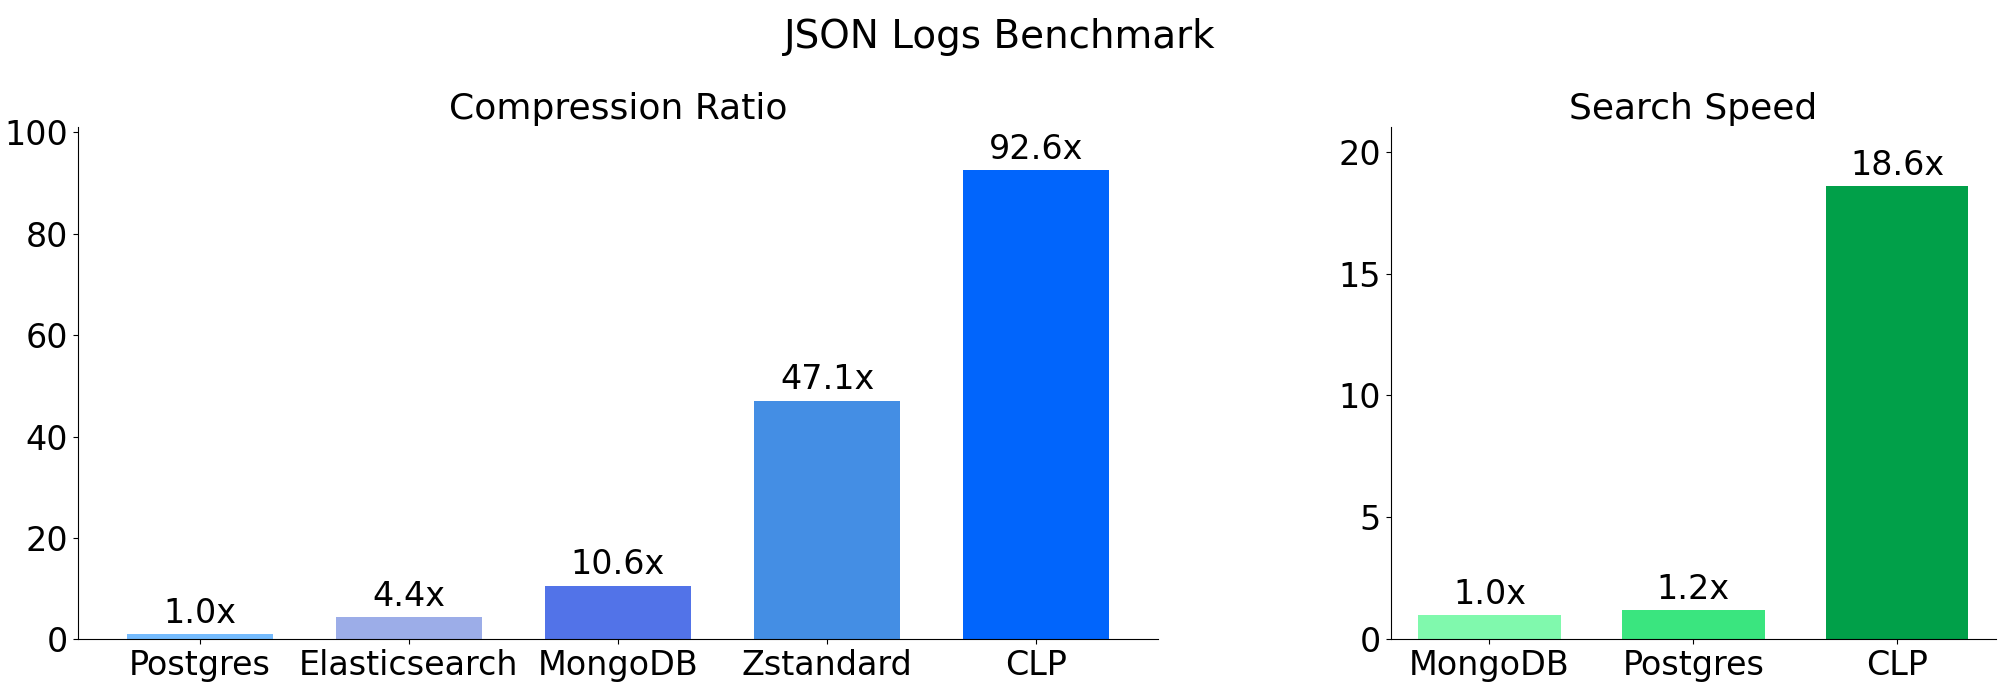 CLP Benchmark on JSON Logs